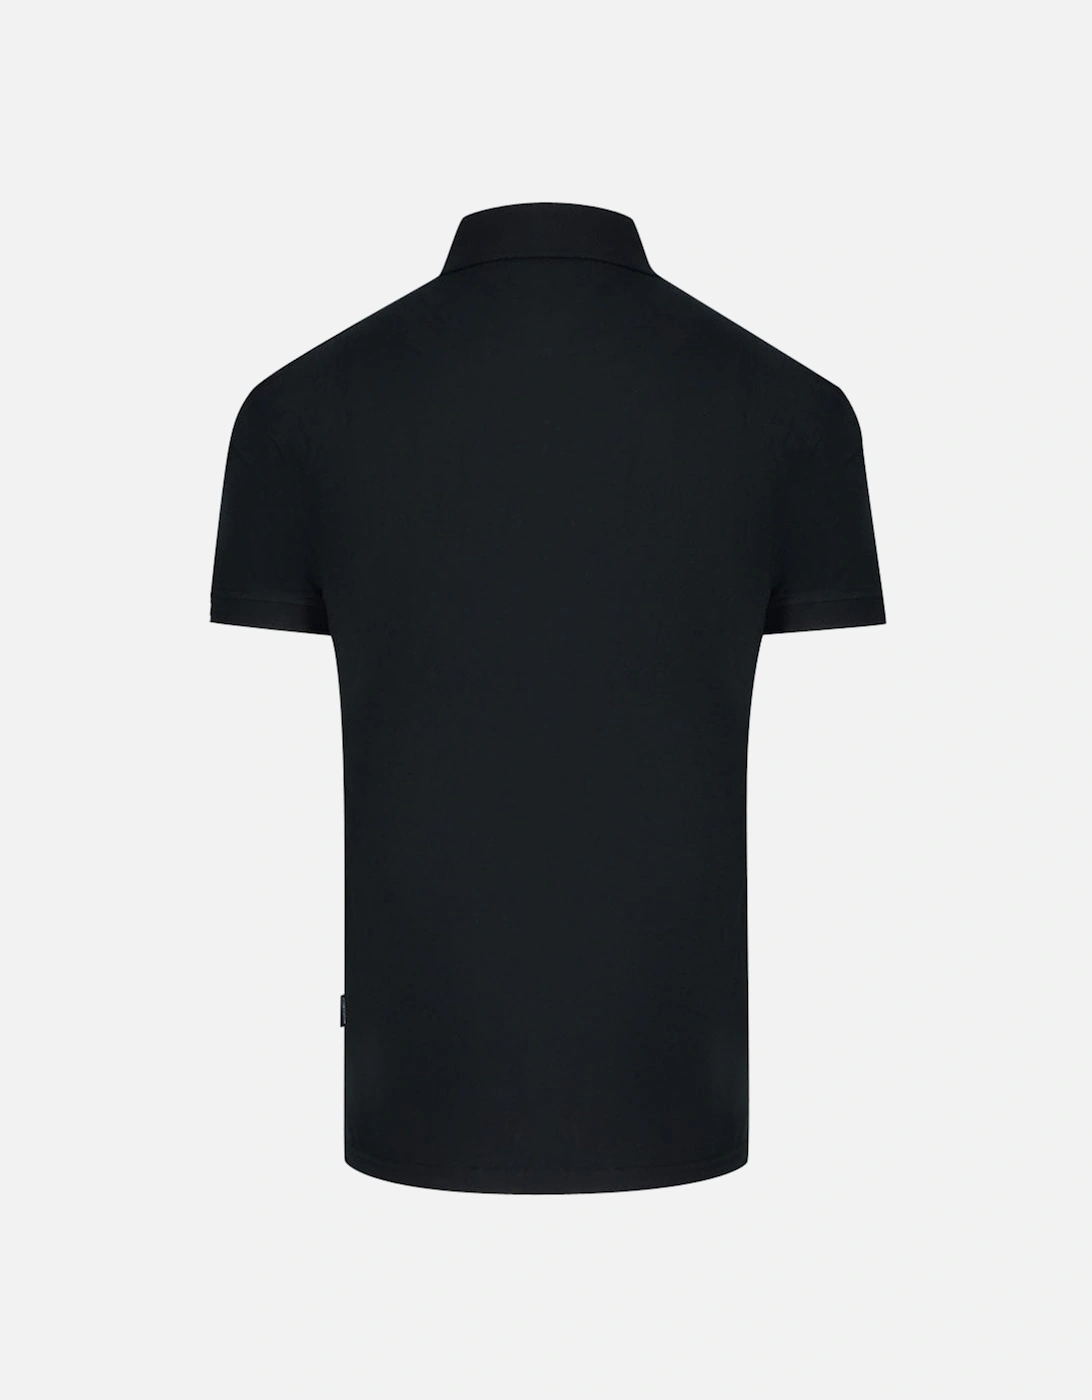 Aldis Brand London Logo Black Polo Shirt